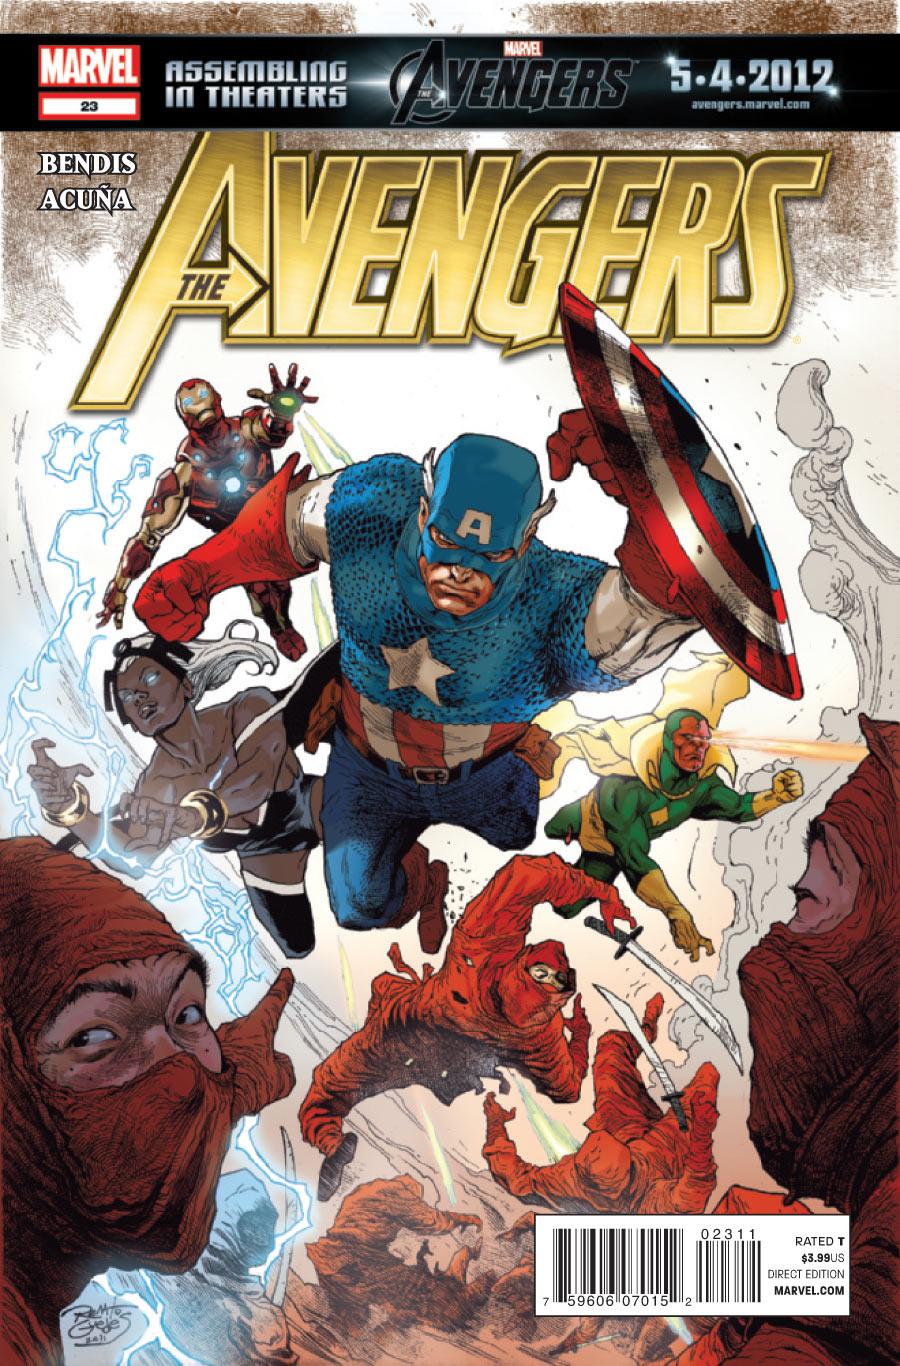 The Avengers Vol. 4 #23